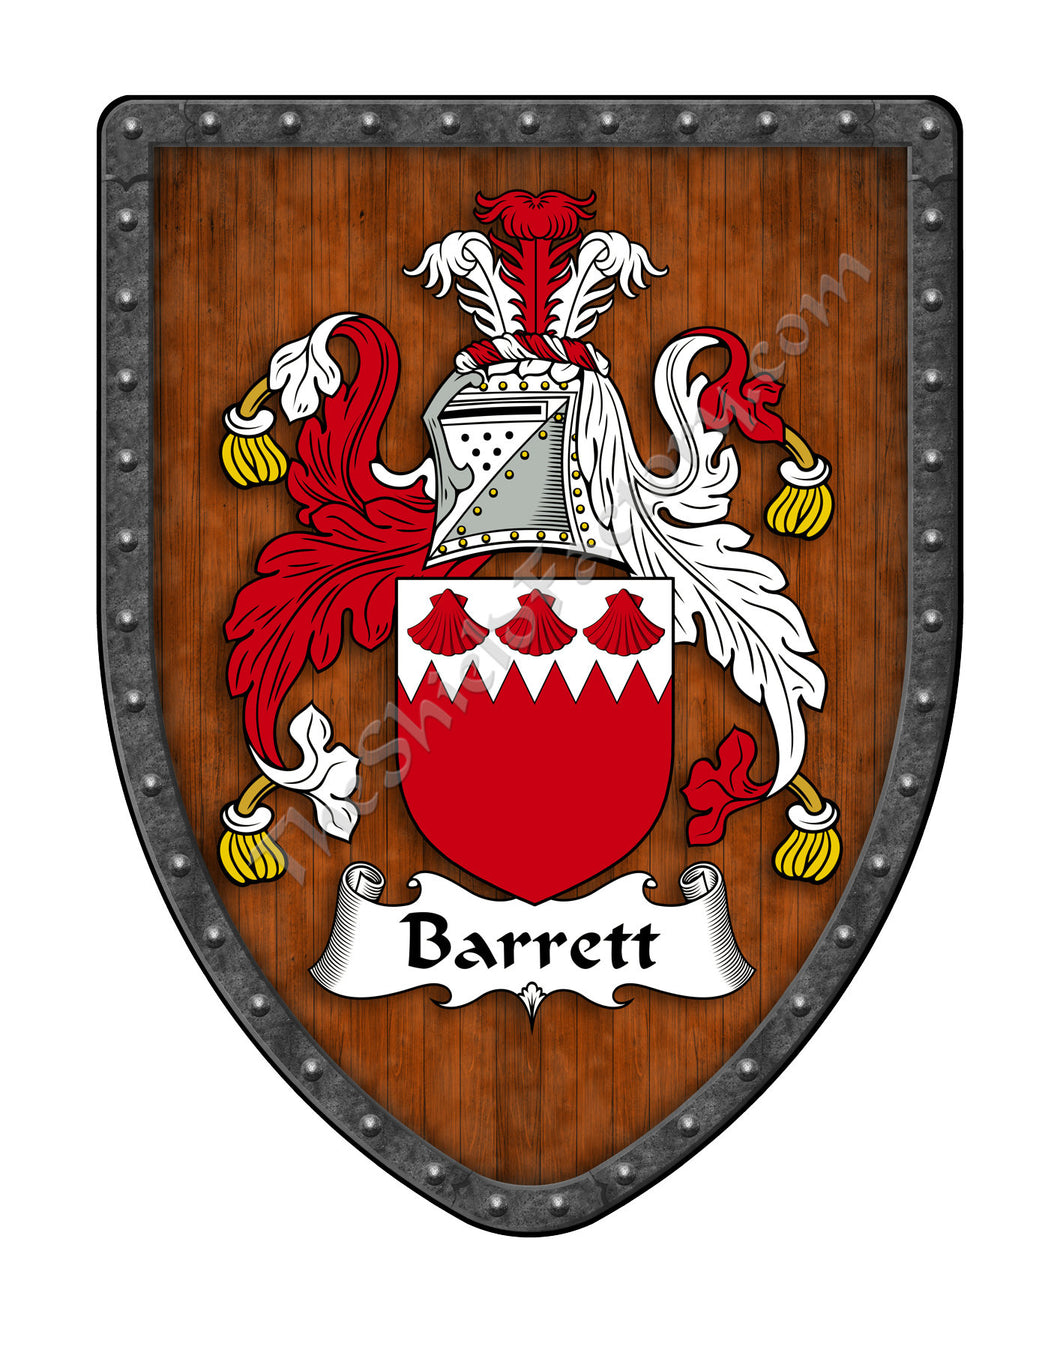 Barrett Coat of Arms Family Crest